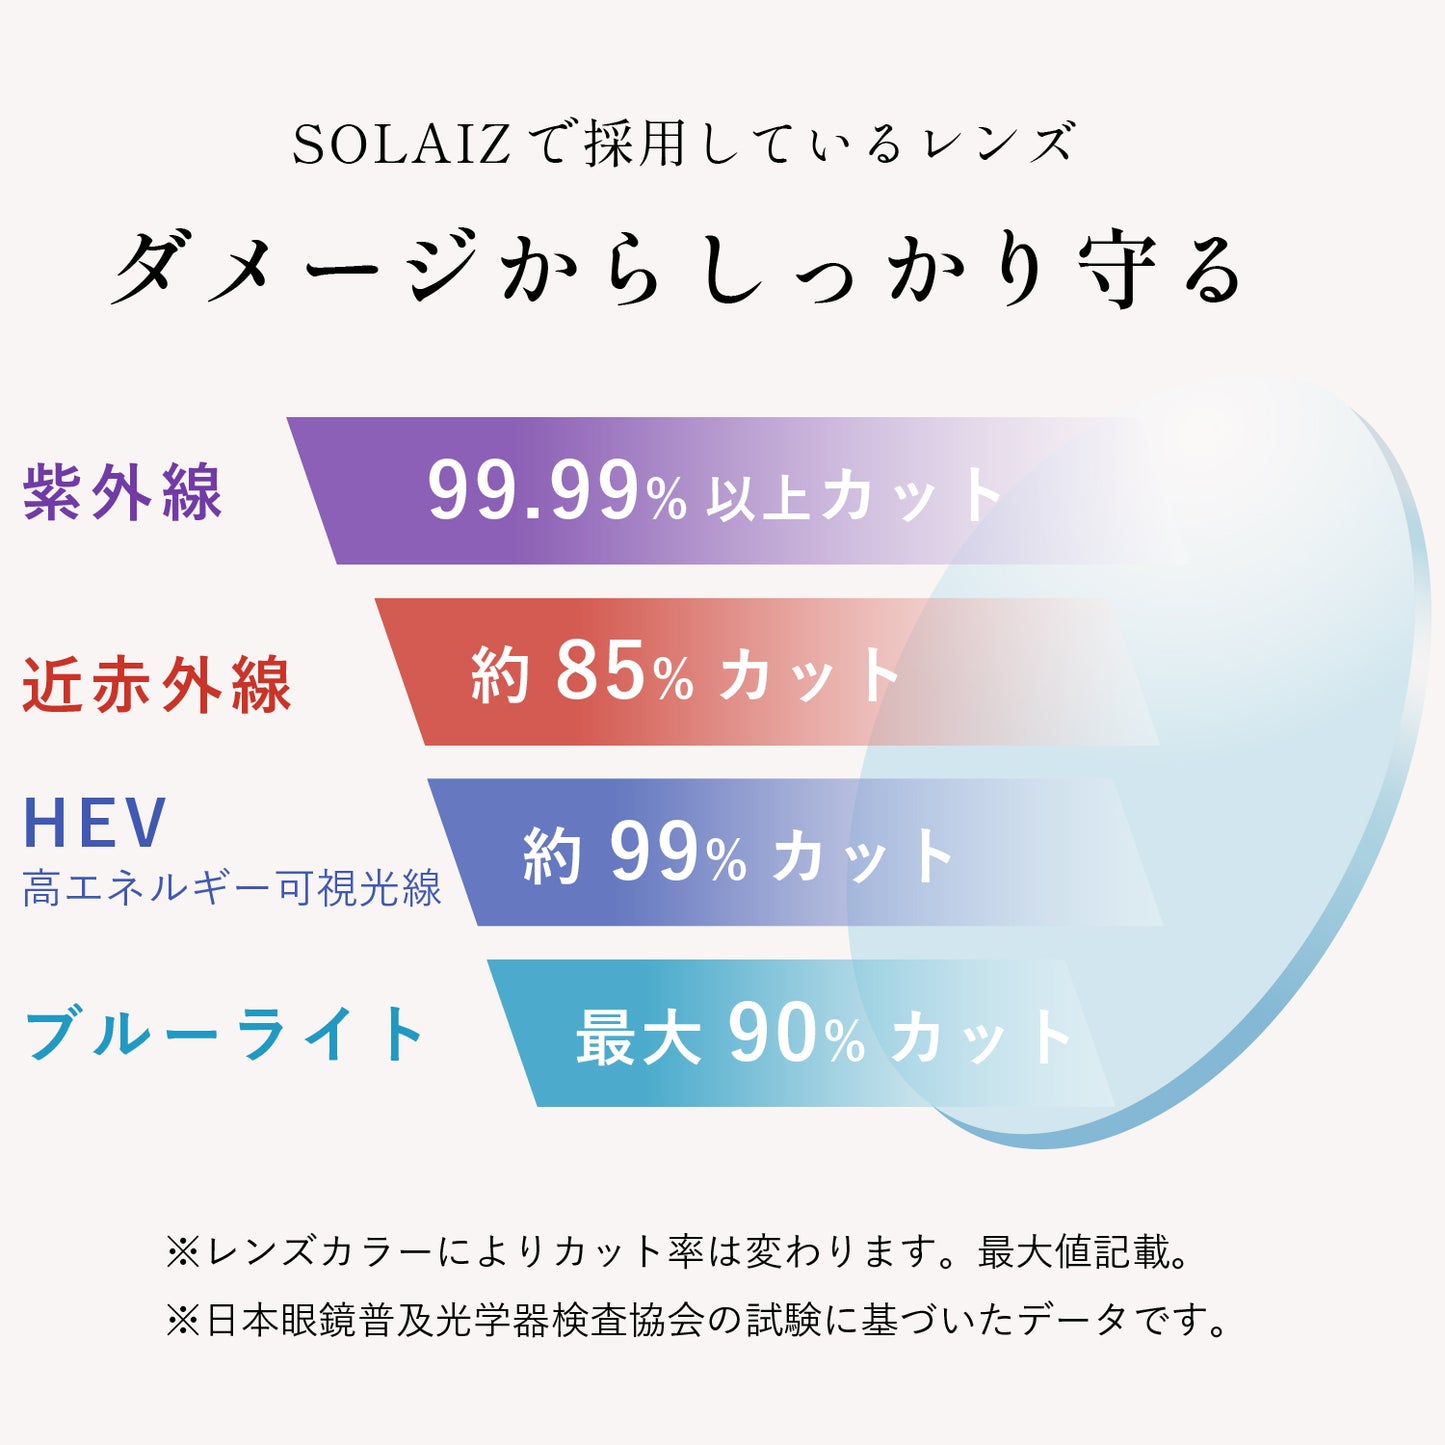 SOLAIZ(ソライズ) SLD-002 OUTDOOR